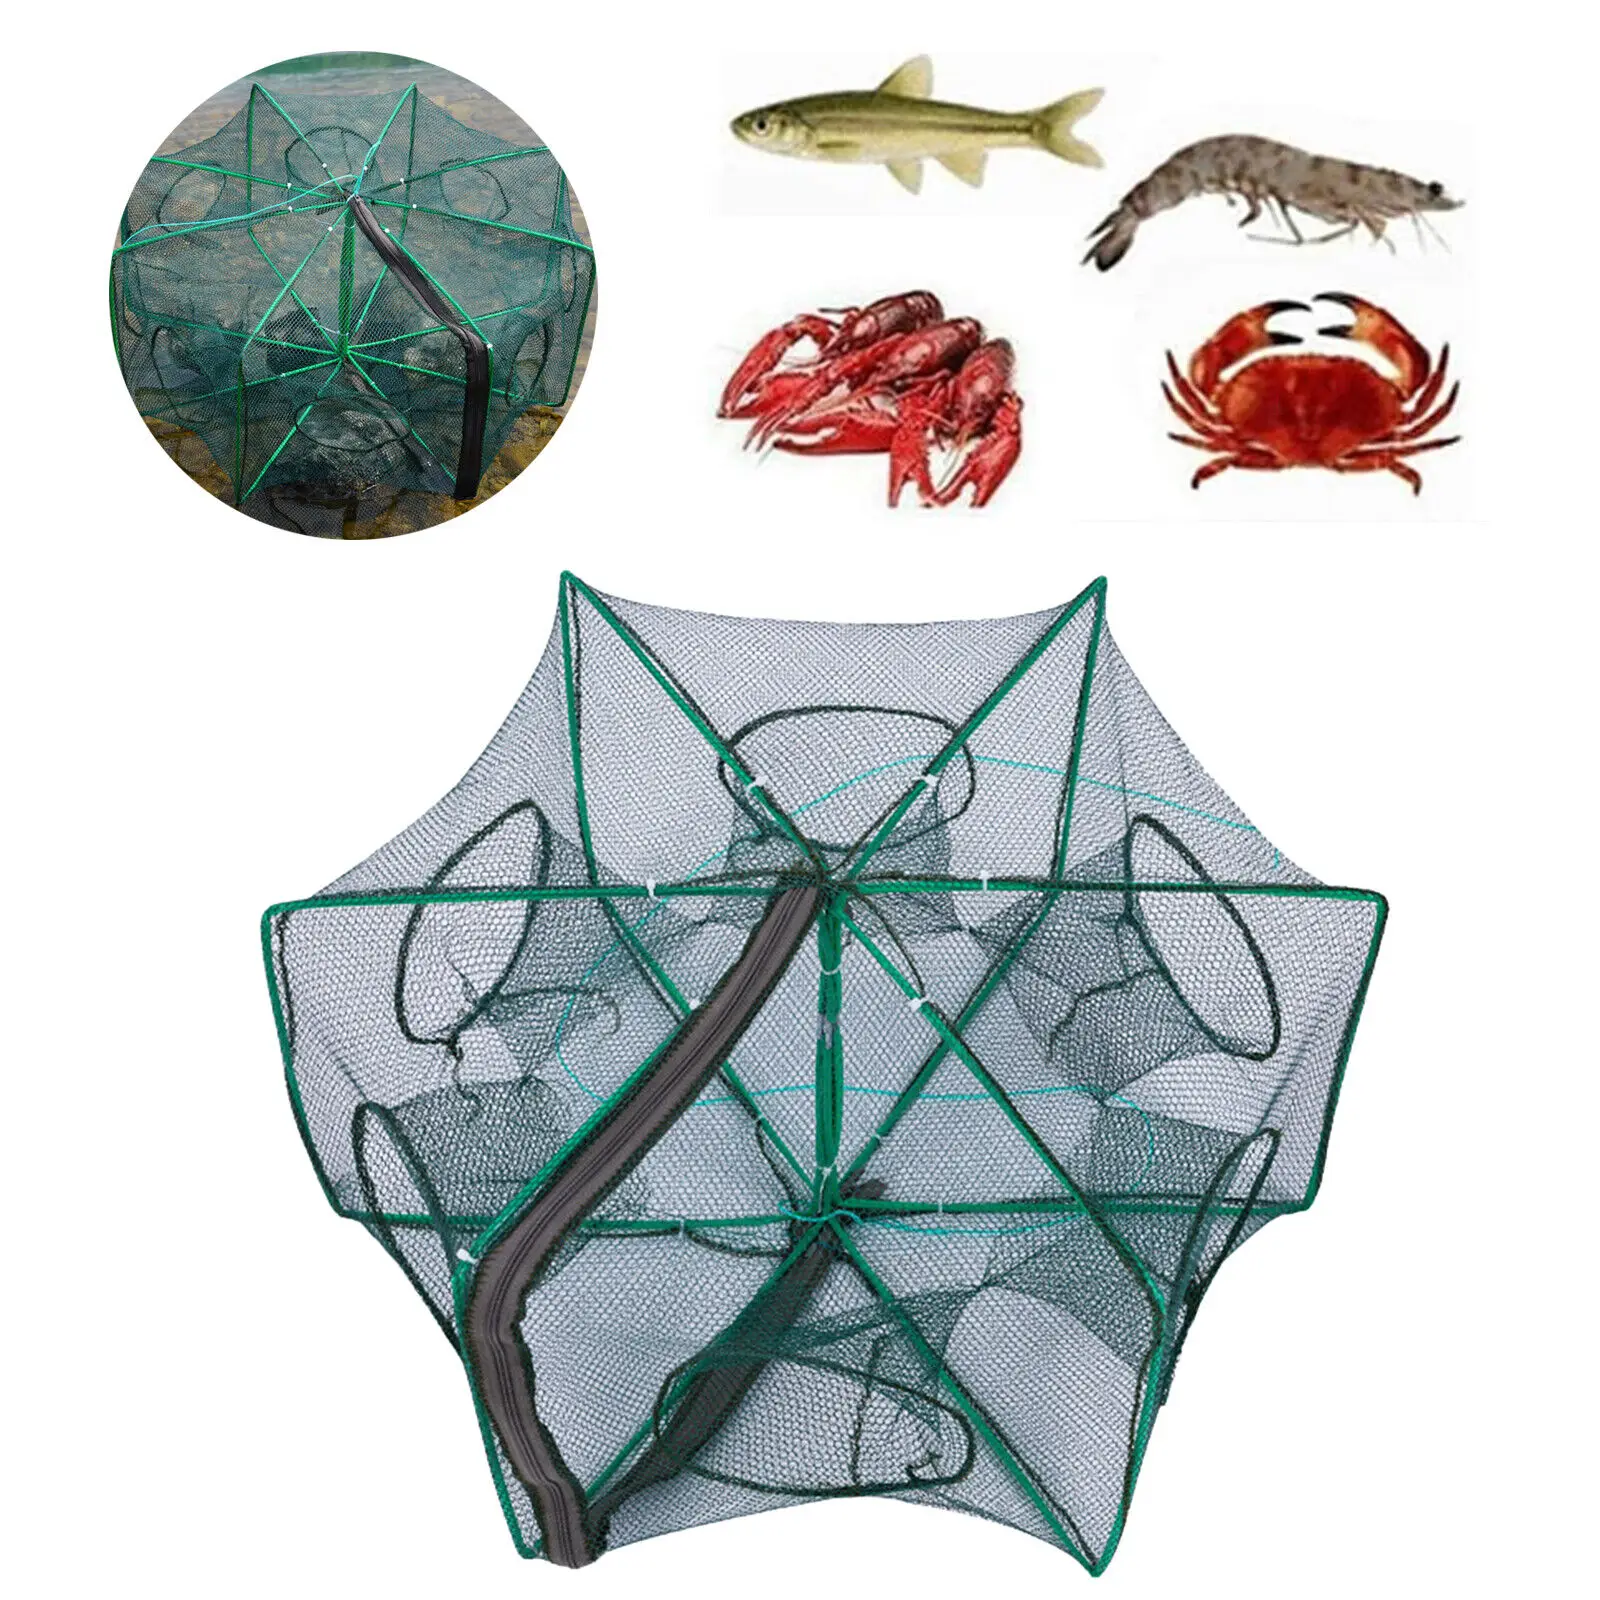 

6 Holes Folded Portable Hexagon Fishing Net Crayfish Fish Automatic Trap Shrimp Carp Catcher Cages Mesh Nets Crab Trap